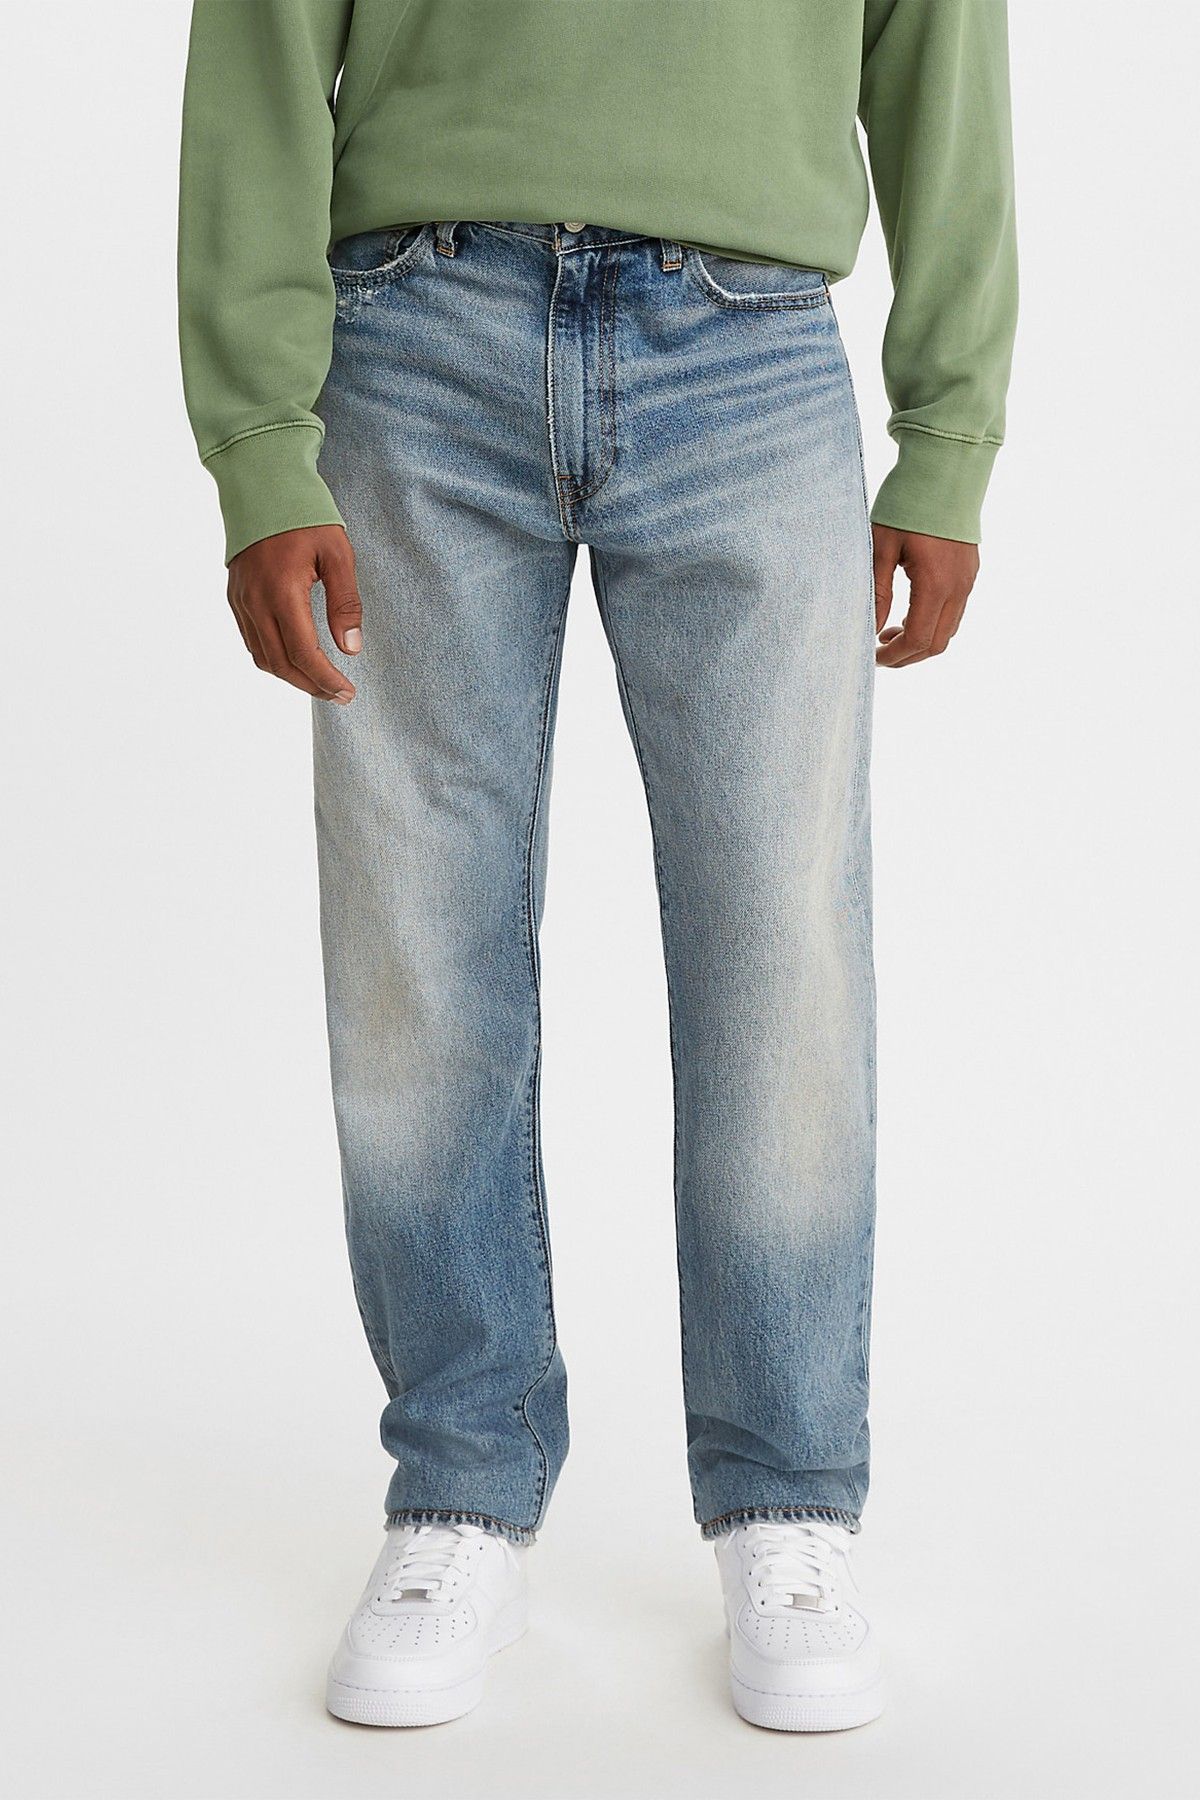 Levi's Â® 551Z Authentic Straight Hula Hopper Men Jeans|